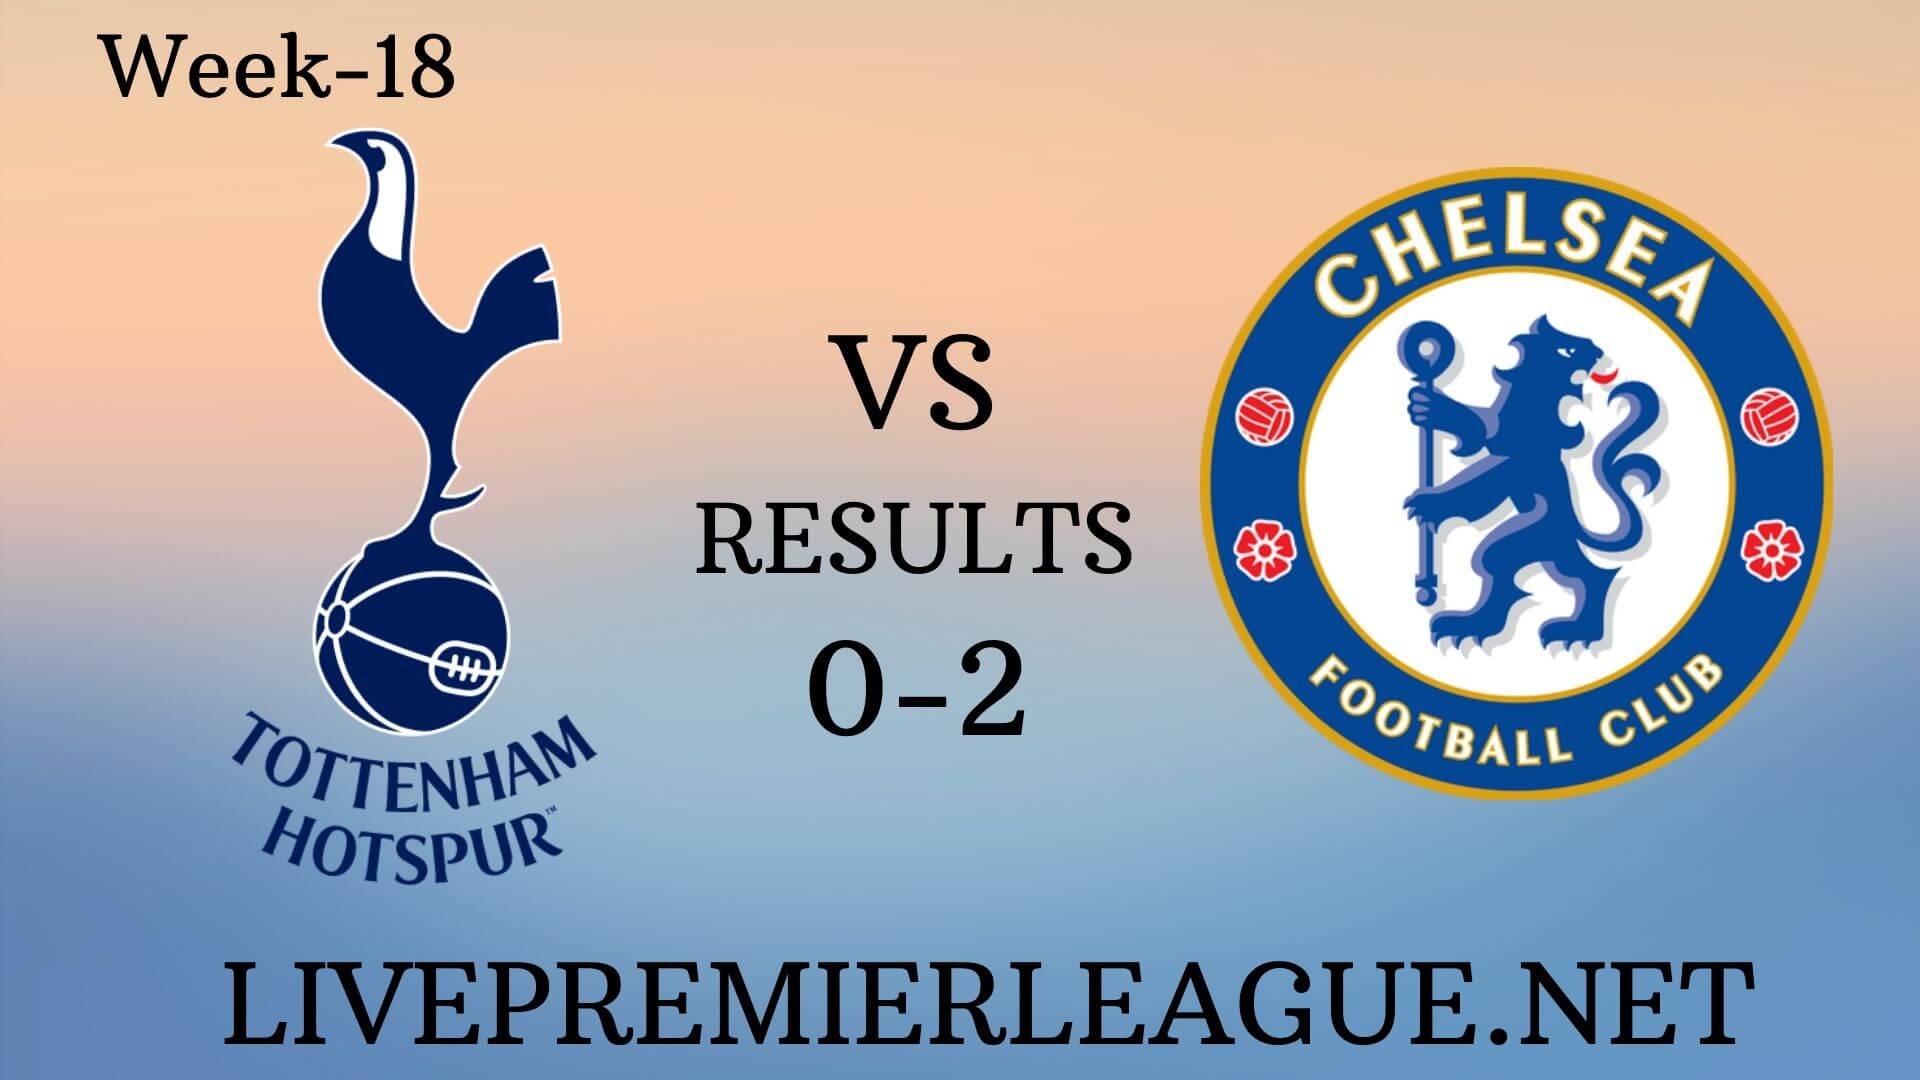 Tottenham Hotspur VS Chelsea  | WEEK 18 RESULT 2019